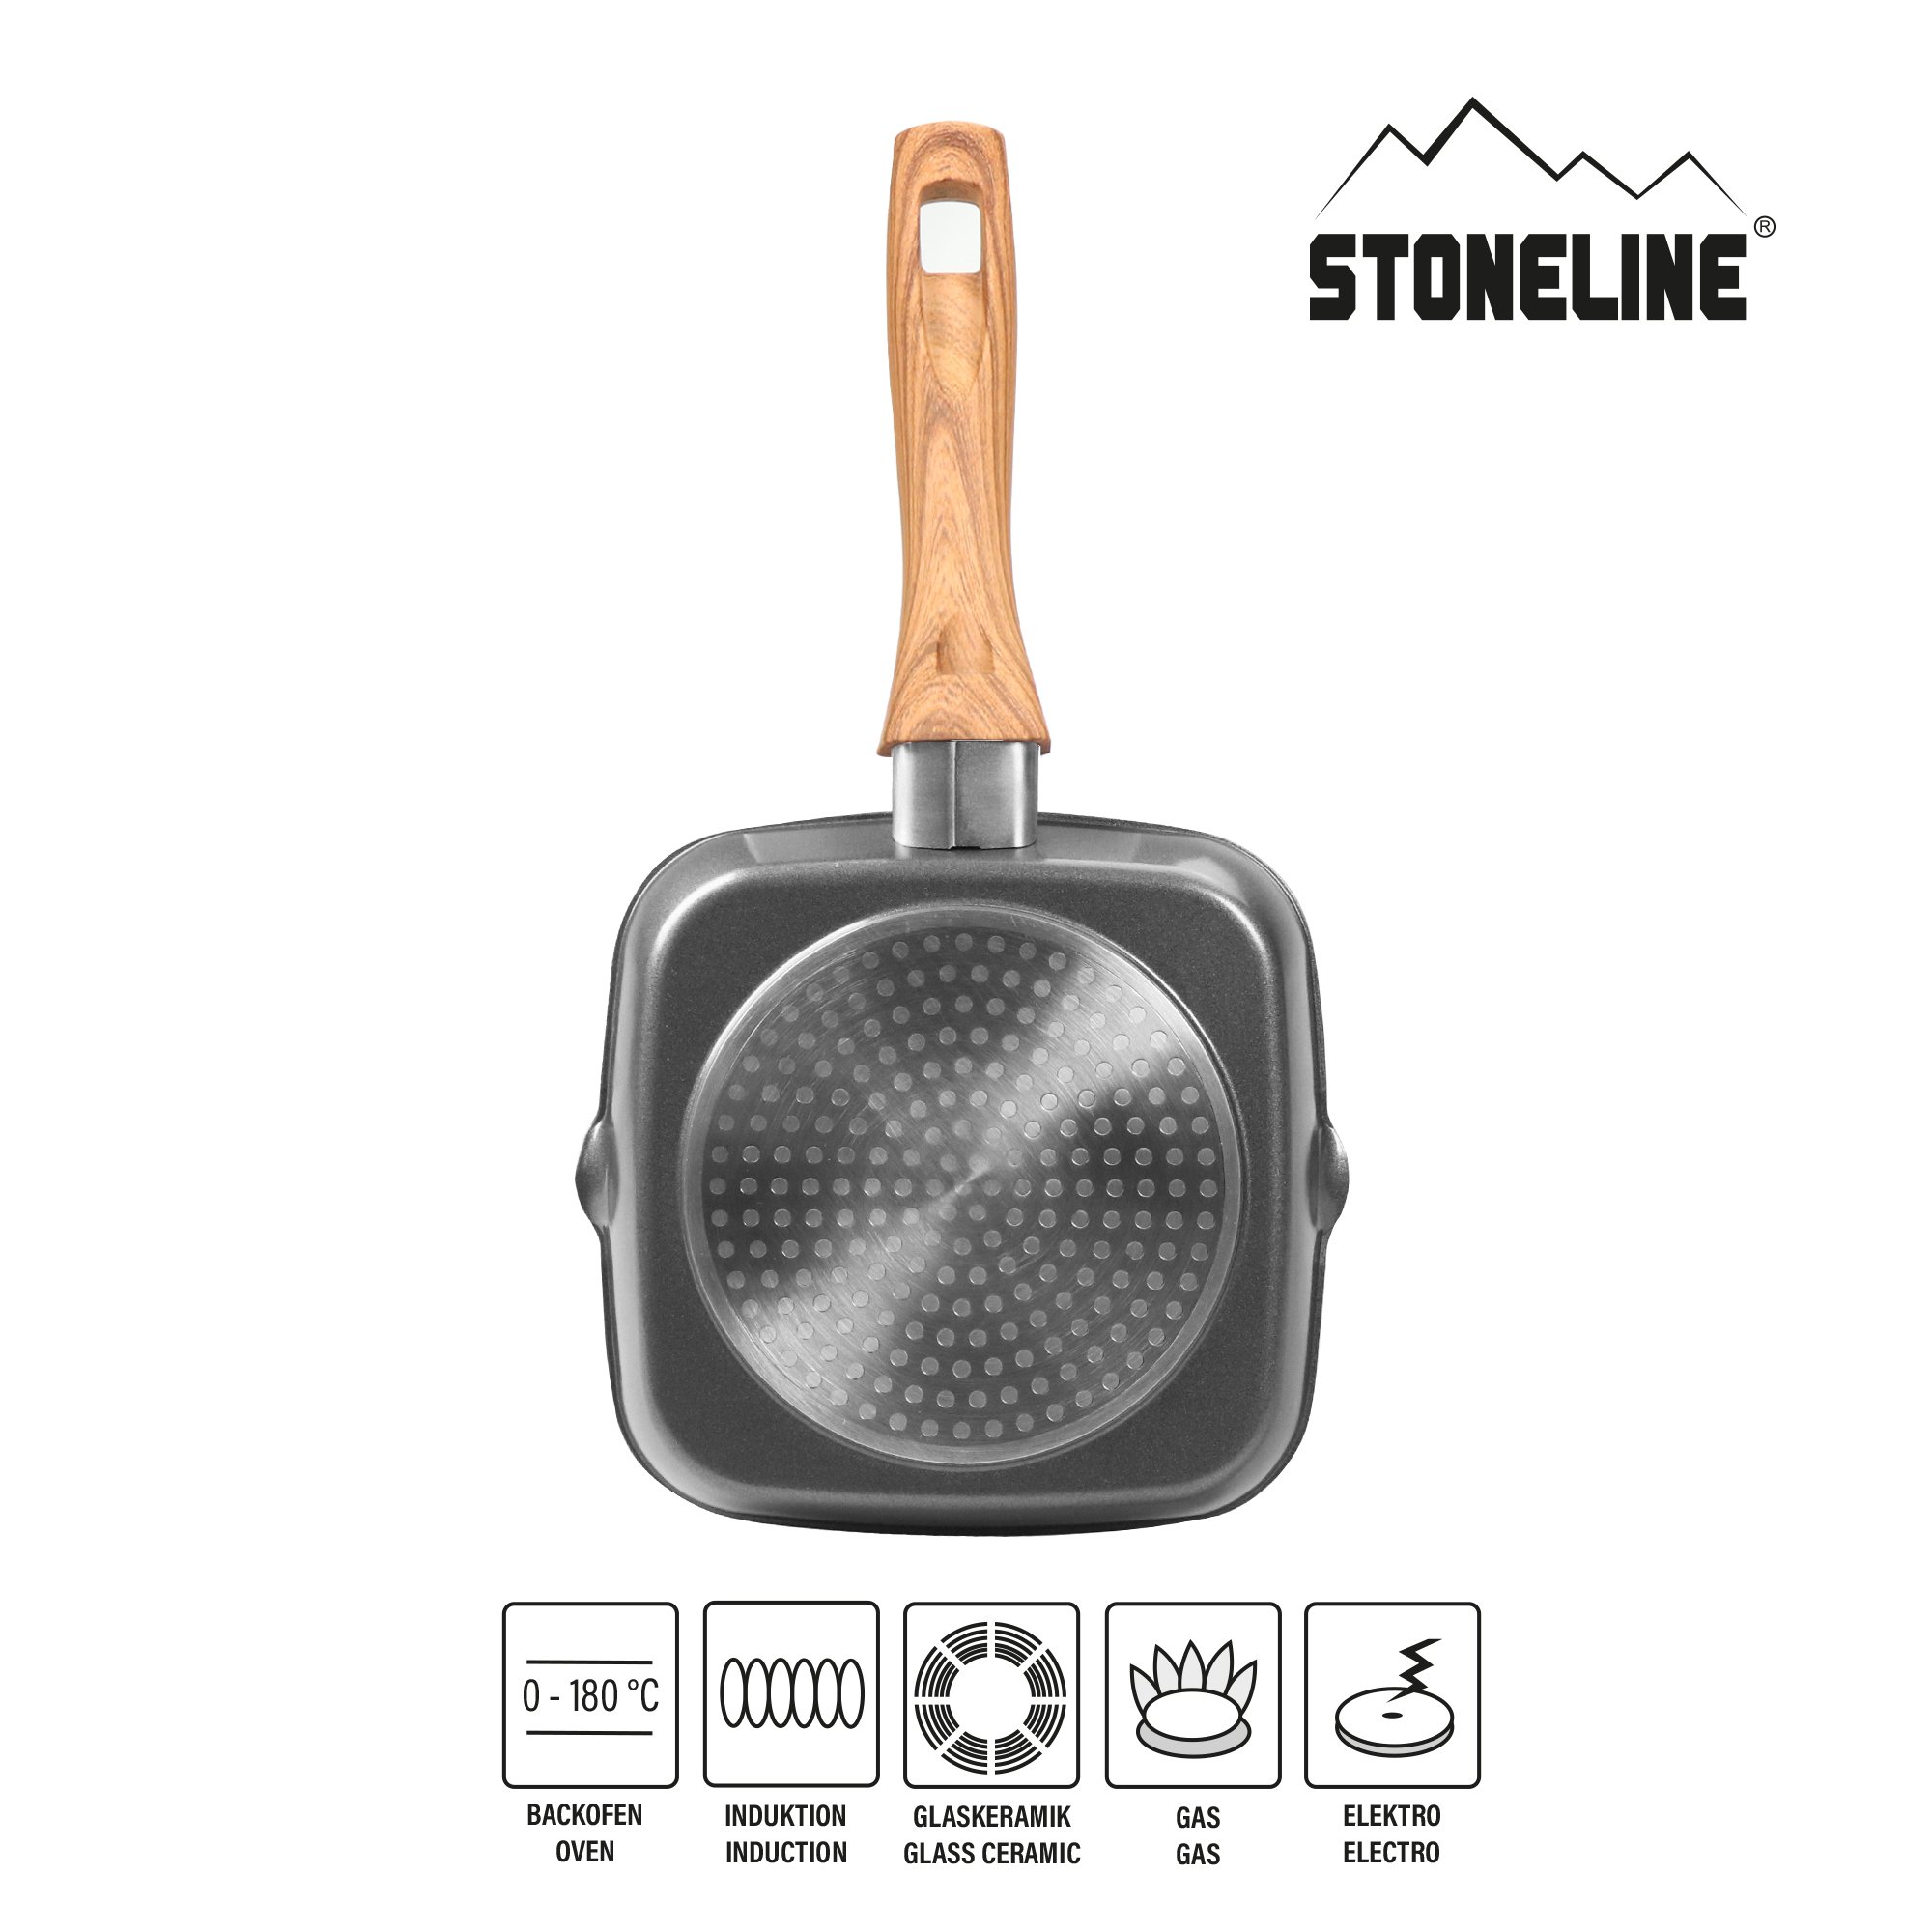 STONELINE® BBQ Griddle Pan 16 cm, 2 Spouts, Non-Stick Pan Wood Design | Back to Nature